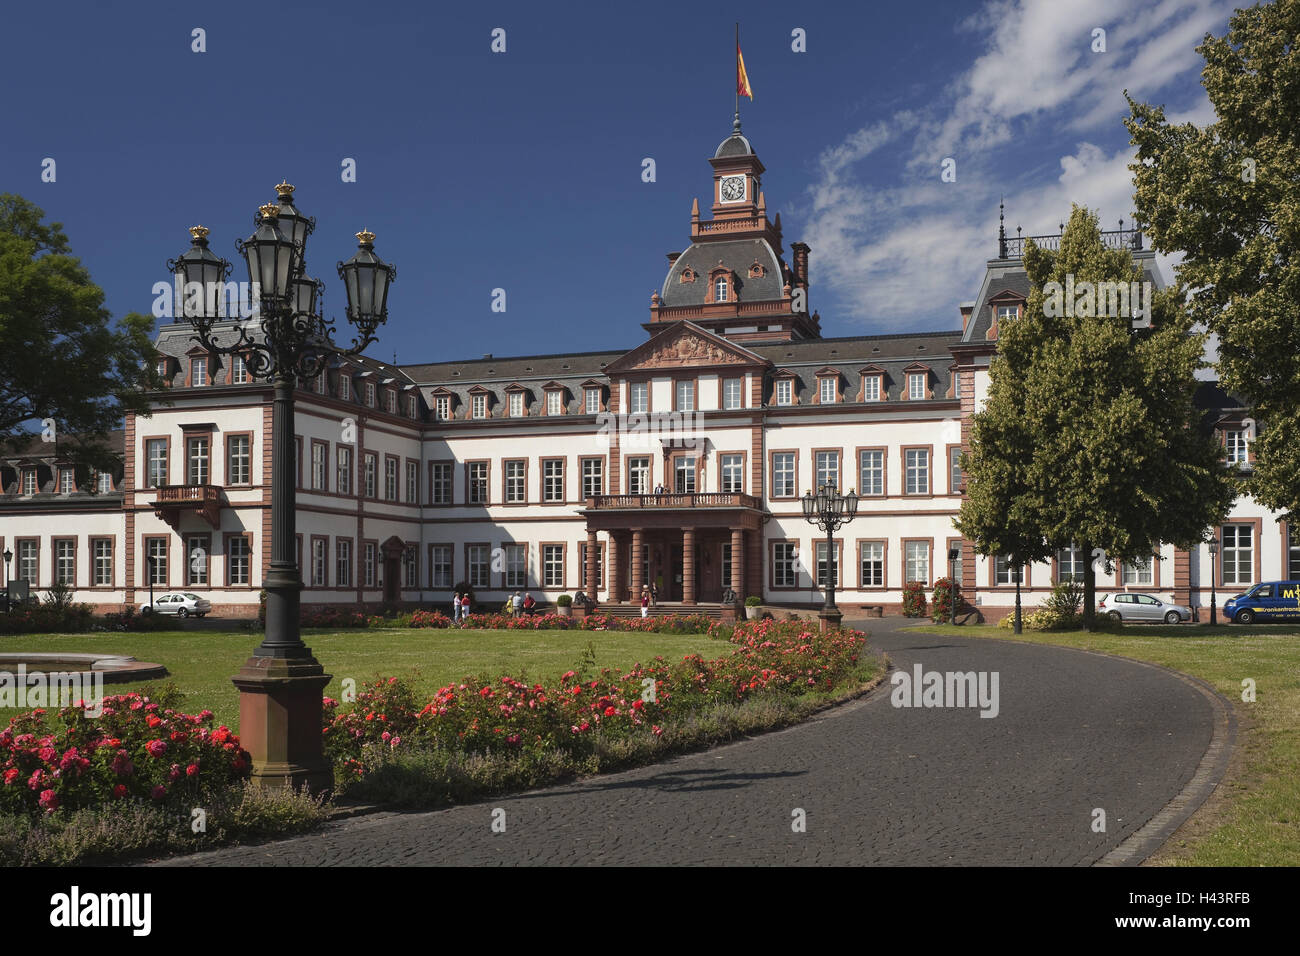 Germany, Hessen, Hanau, castle Philippsruhe, town, architecture, lock, castle building, place of interest, Stock Photo